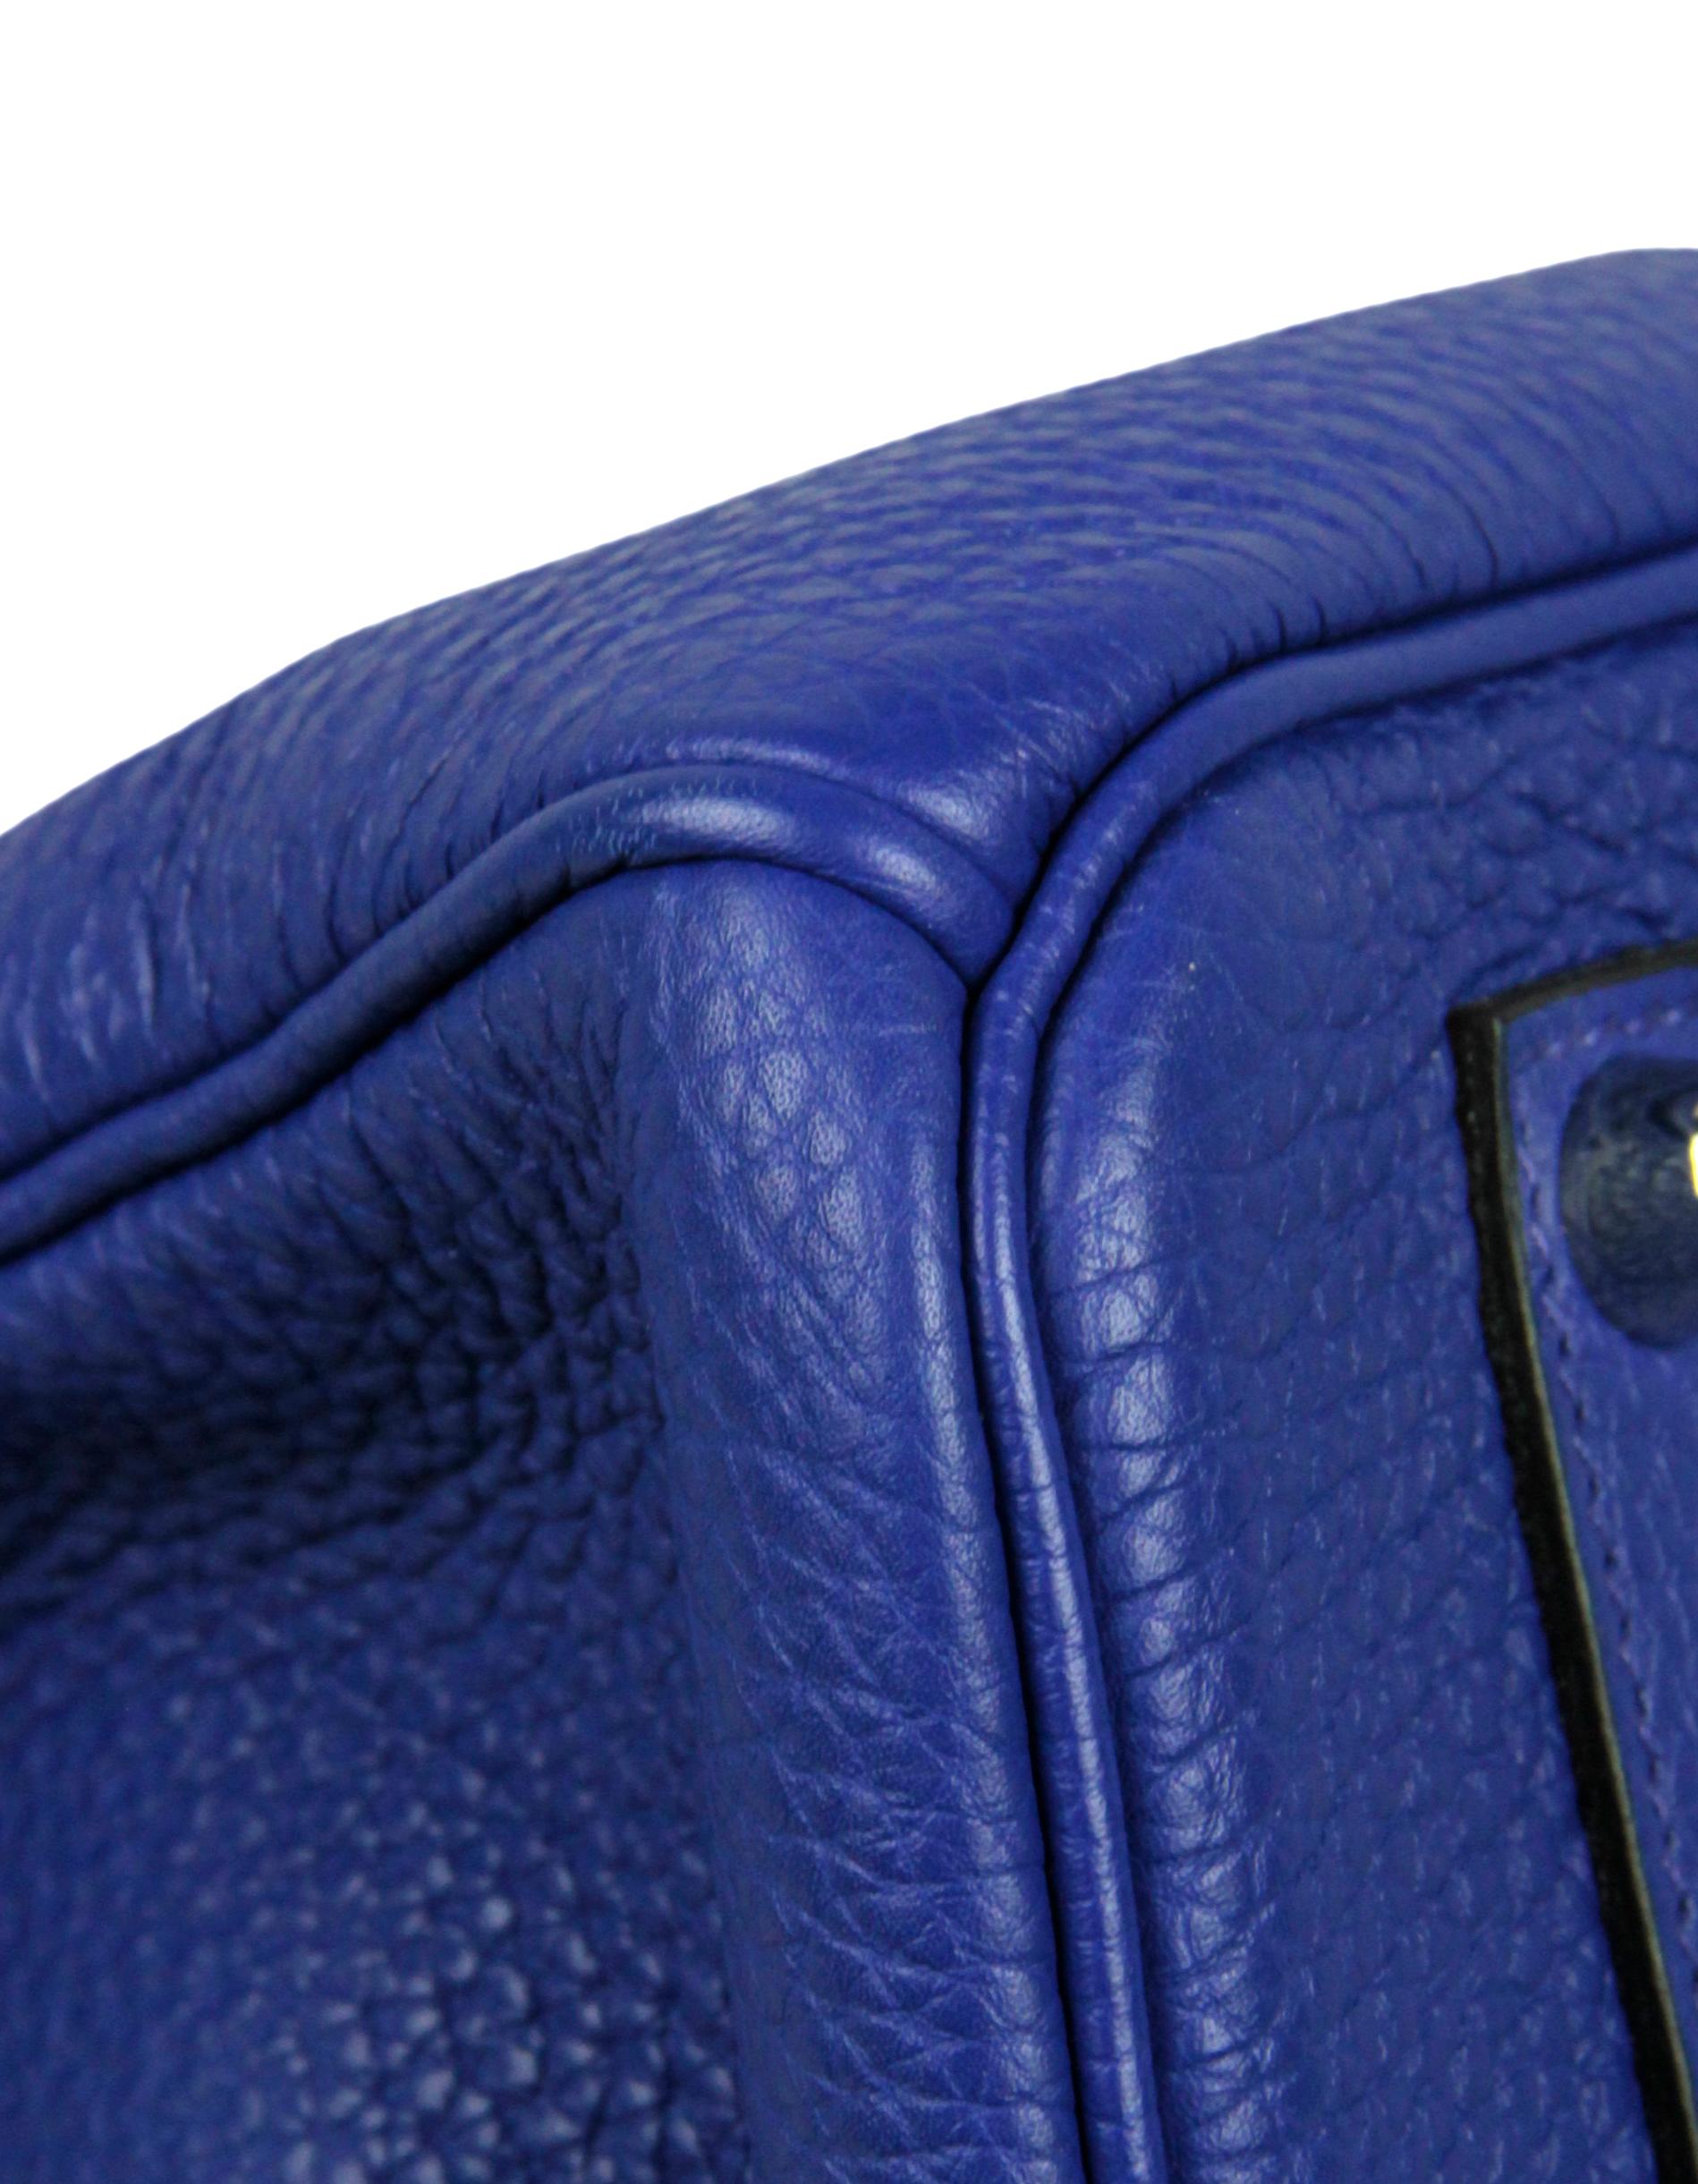 Bleu Sac Birkin 35cm en cuir Togo électrique bleu Hermes PHW en vente